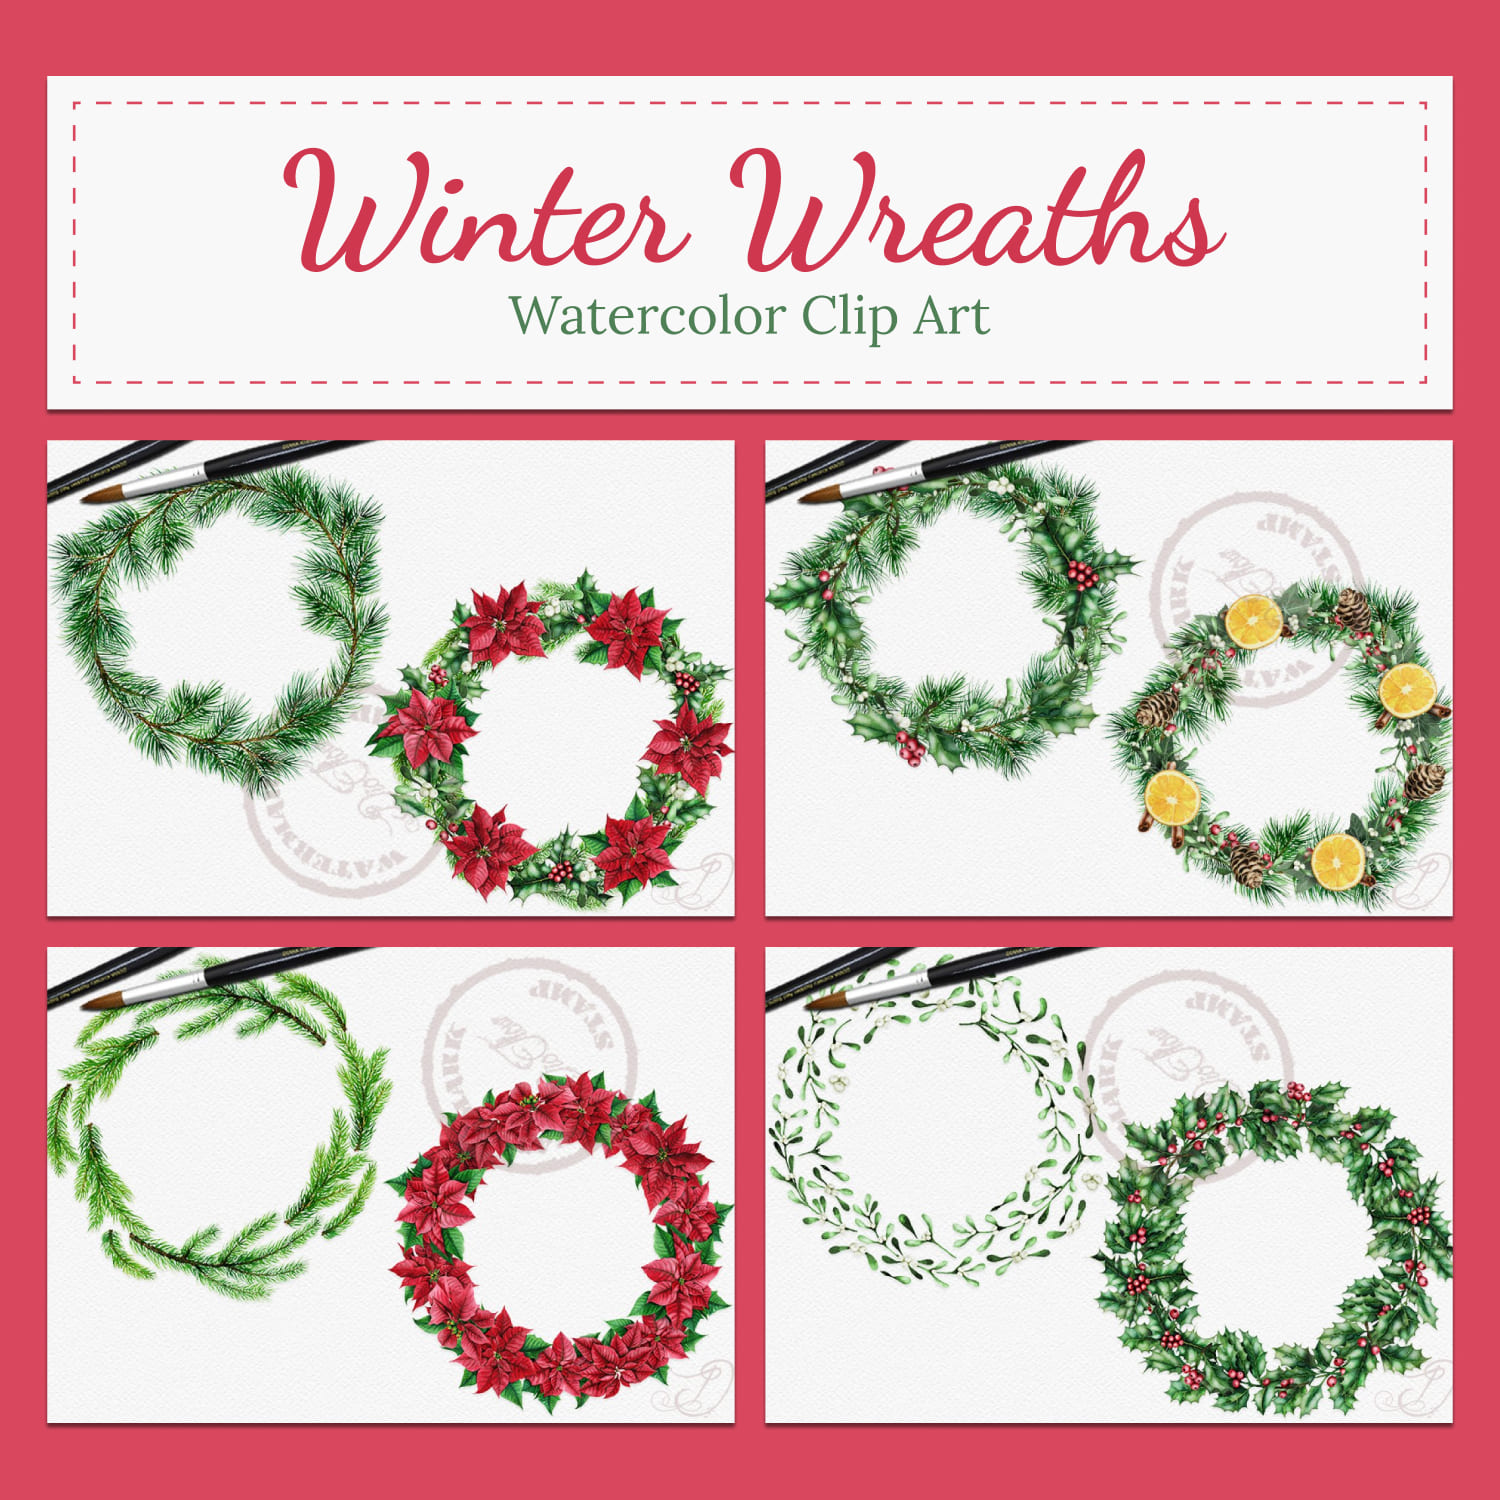 Winter Wreaths Watercolor Clip Art.